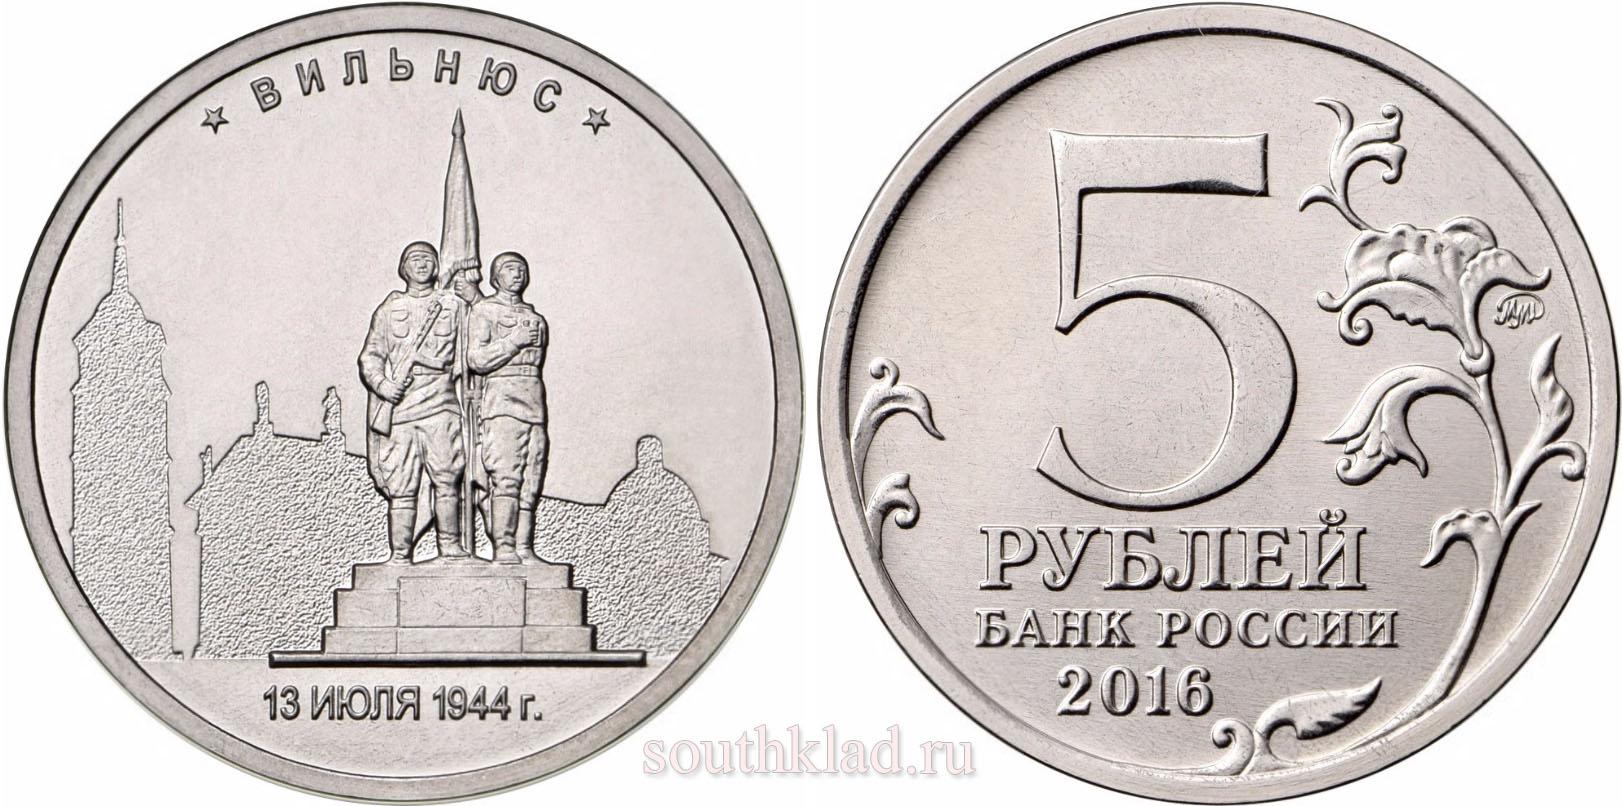 5 рублей 2016 года Вильнюс. 13.07.1944 г.